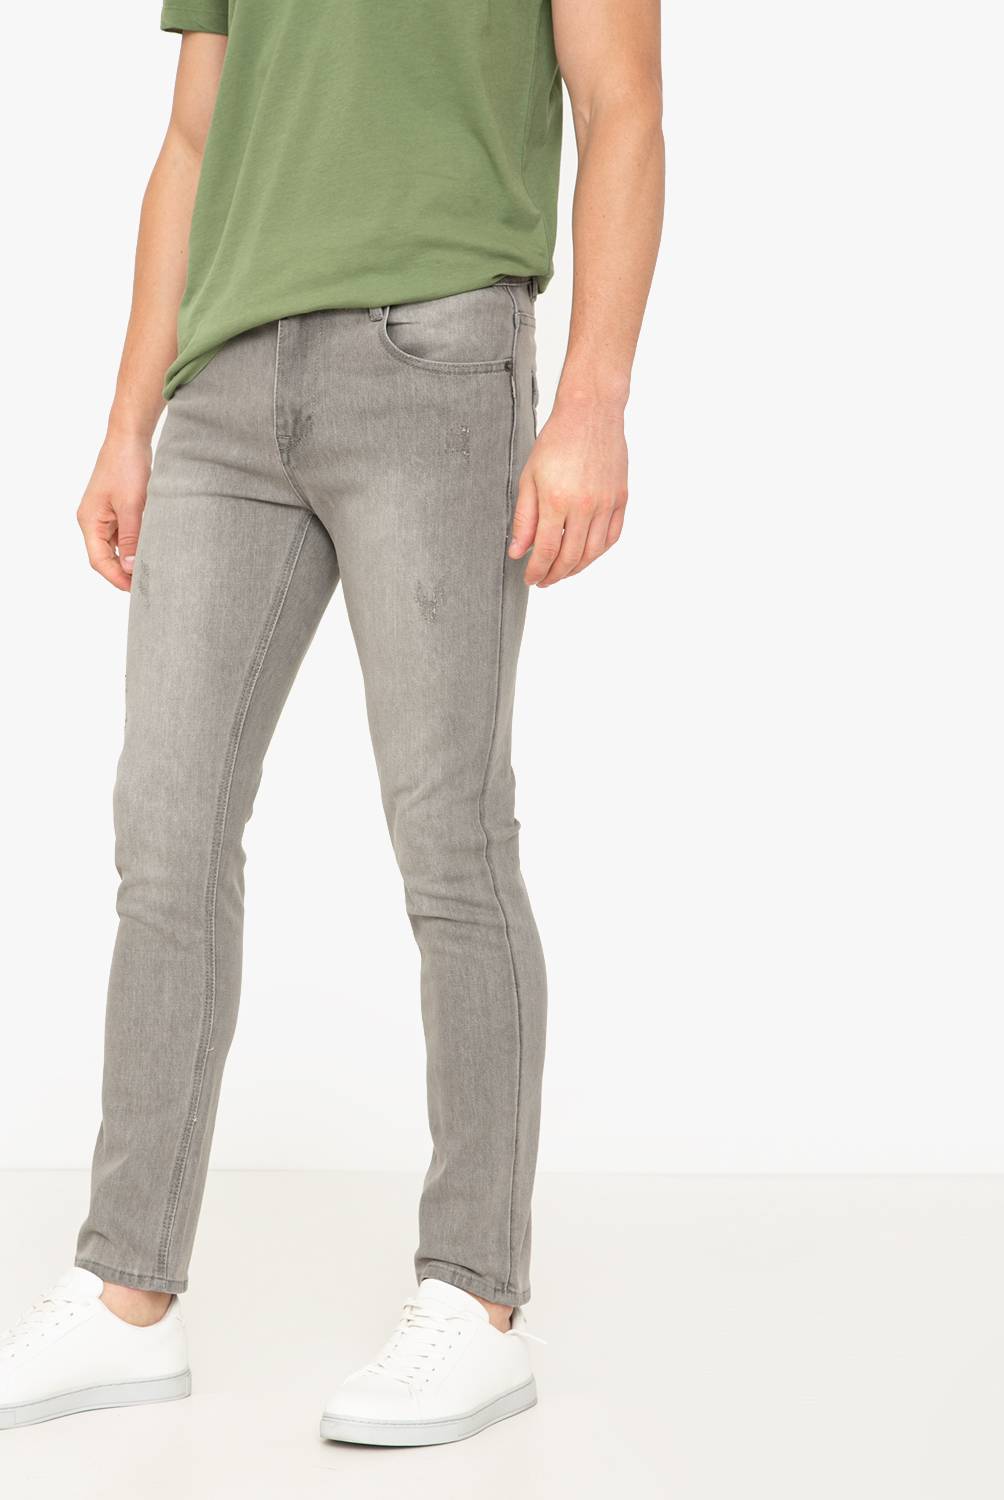 BASEMENT - Jeans Básico Skinny Fit